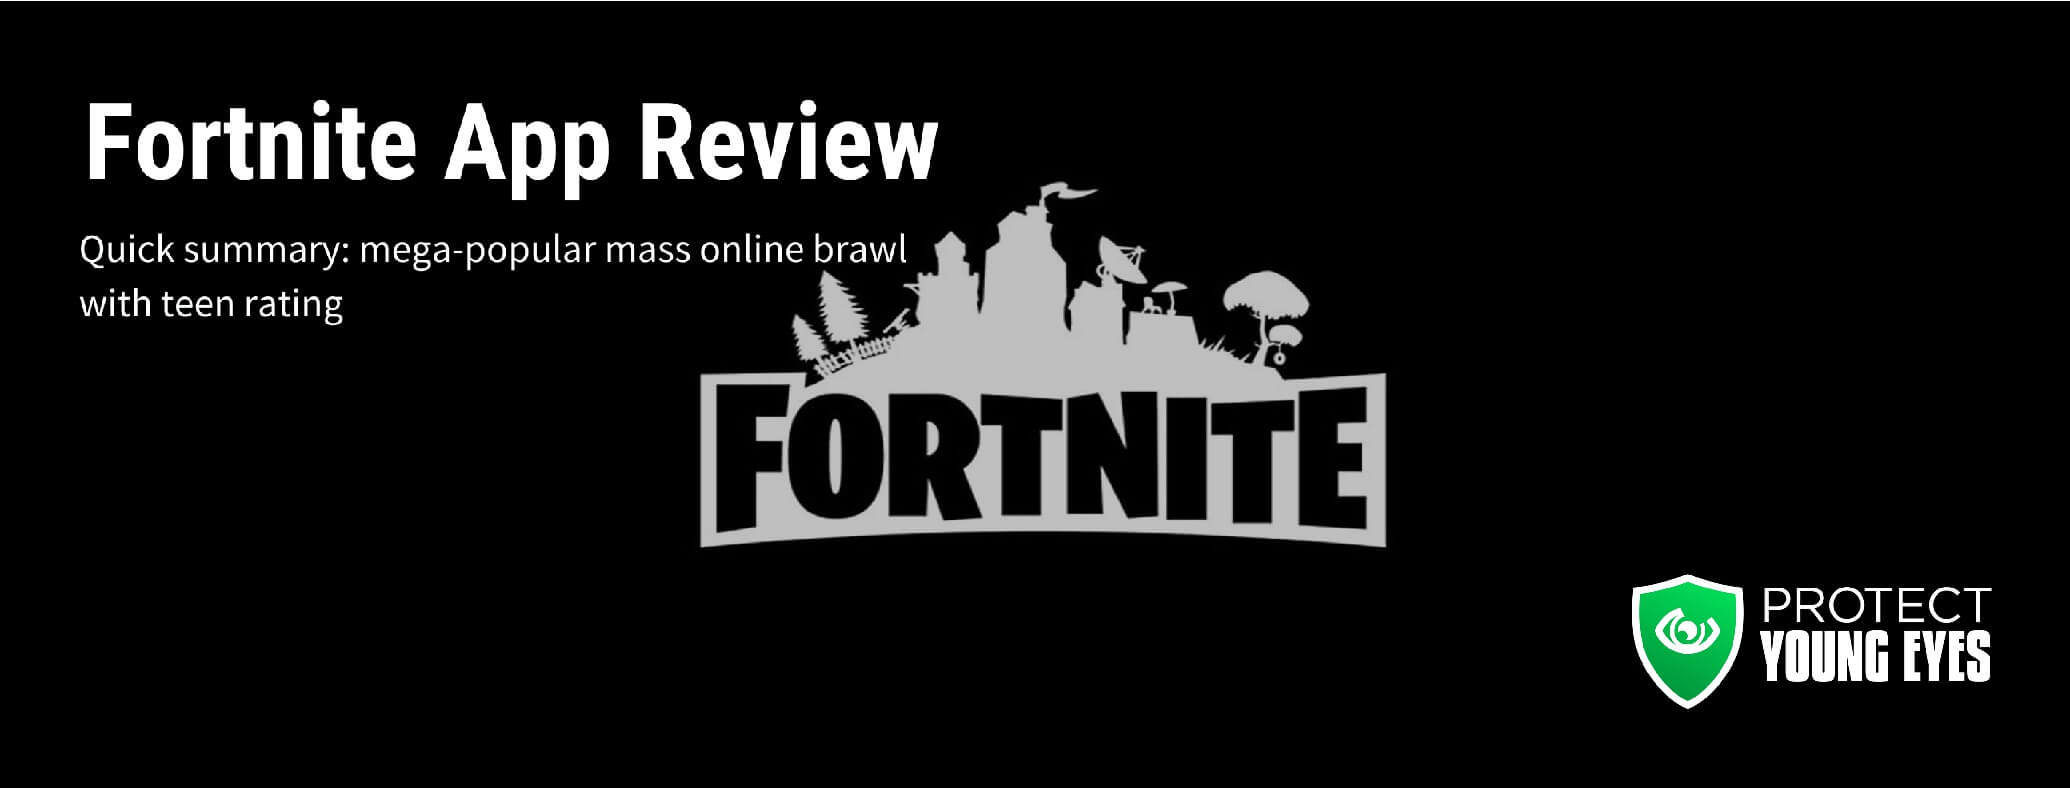 Fortnite App Review Header Image